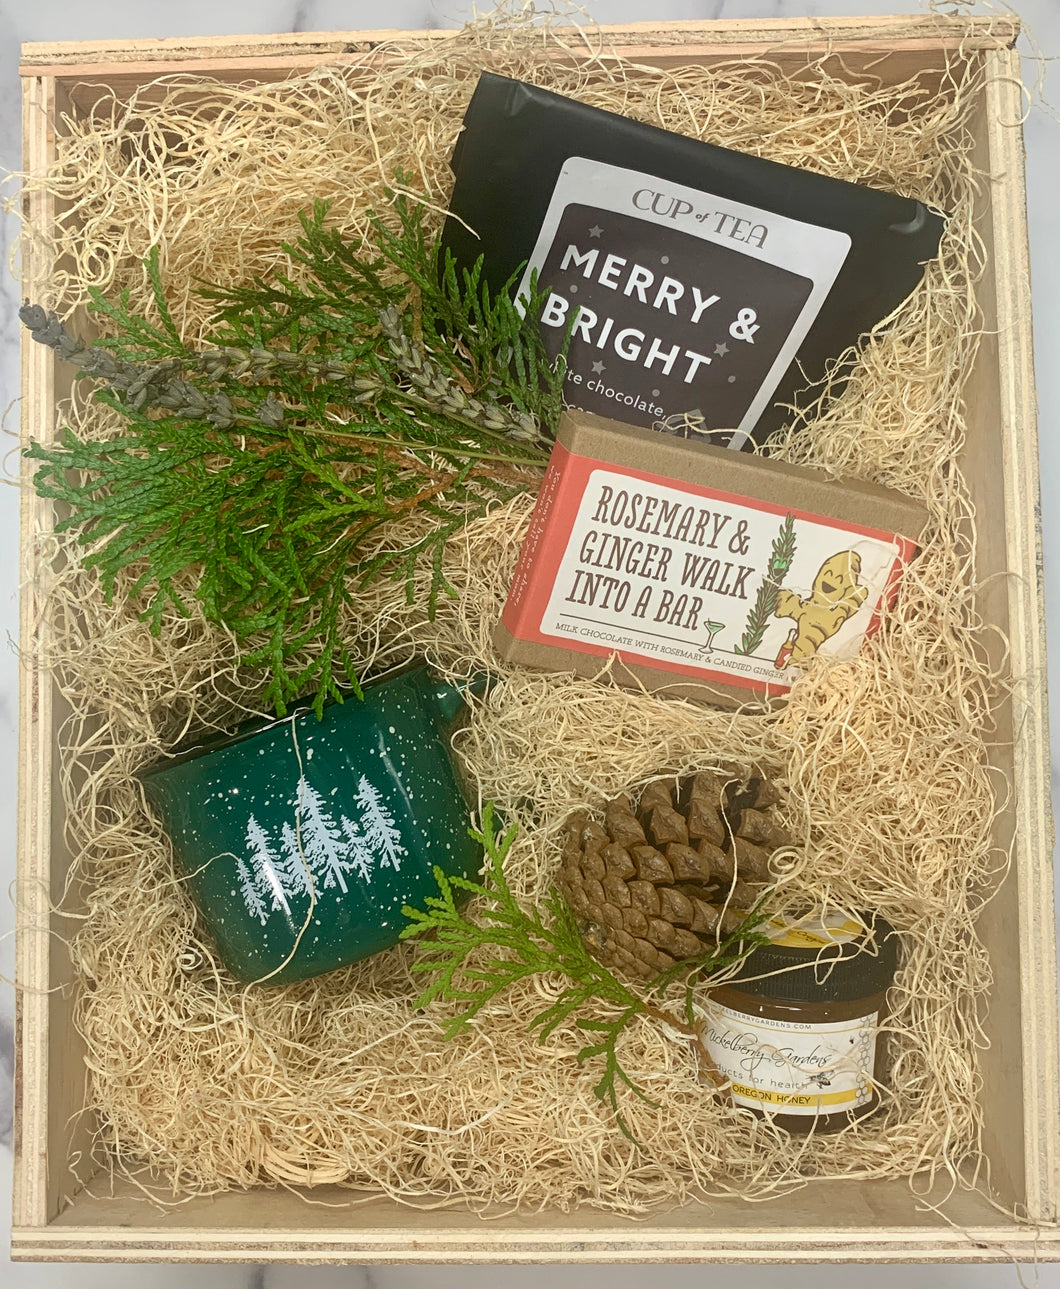 Sample box that includes tea, chocolate,  camping mug and hone